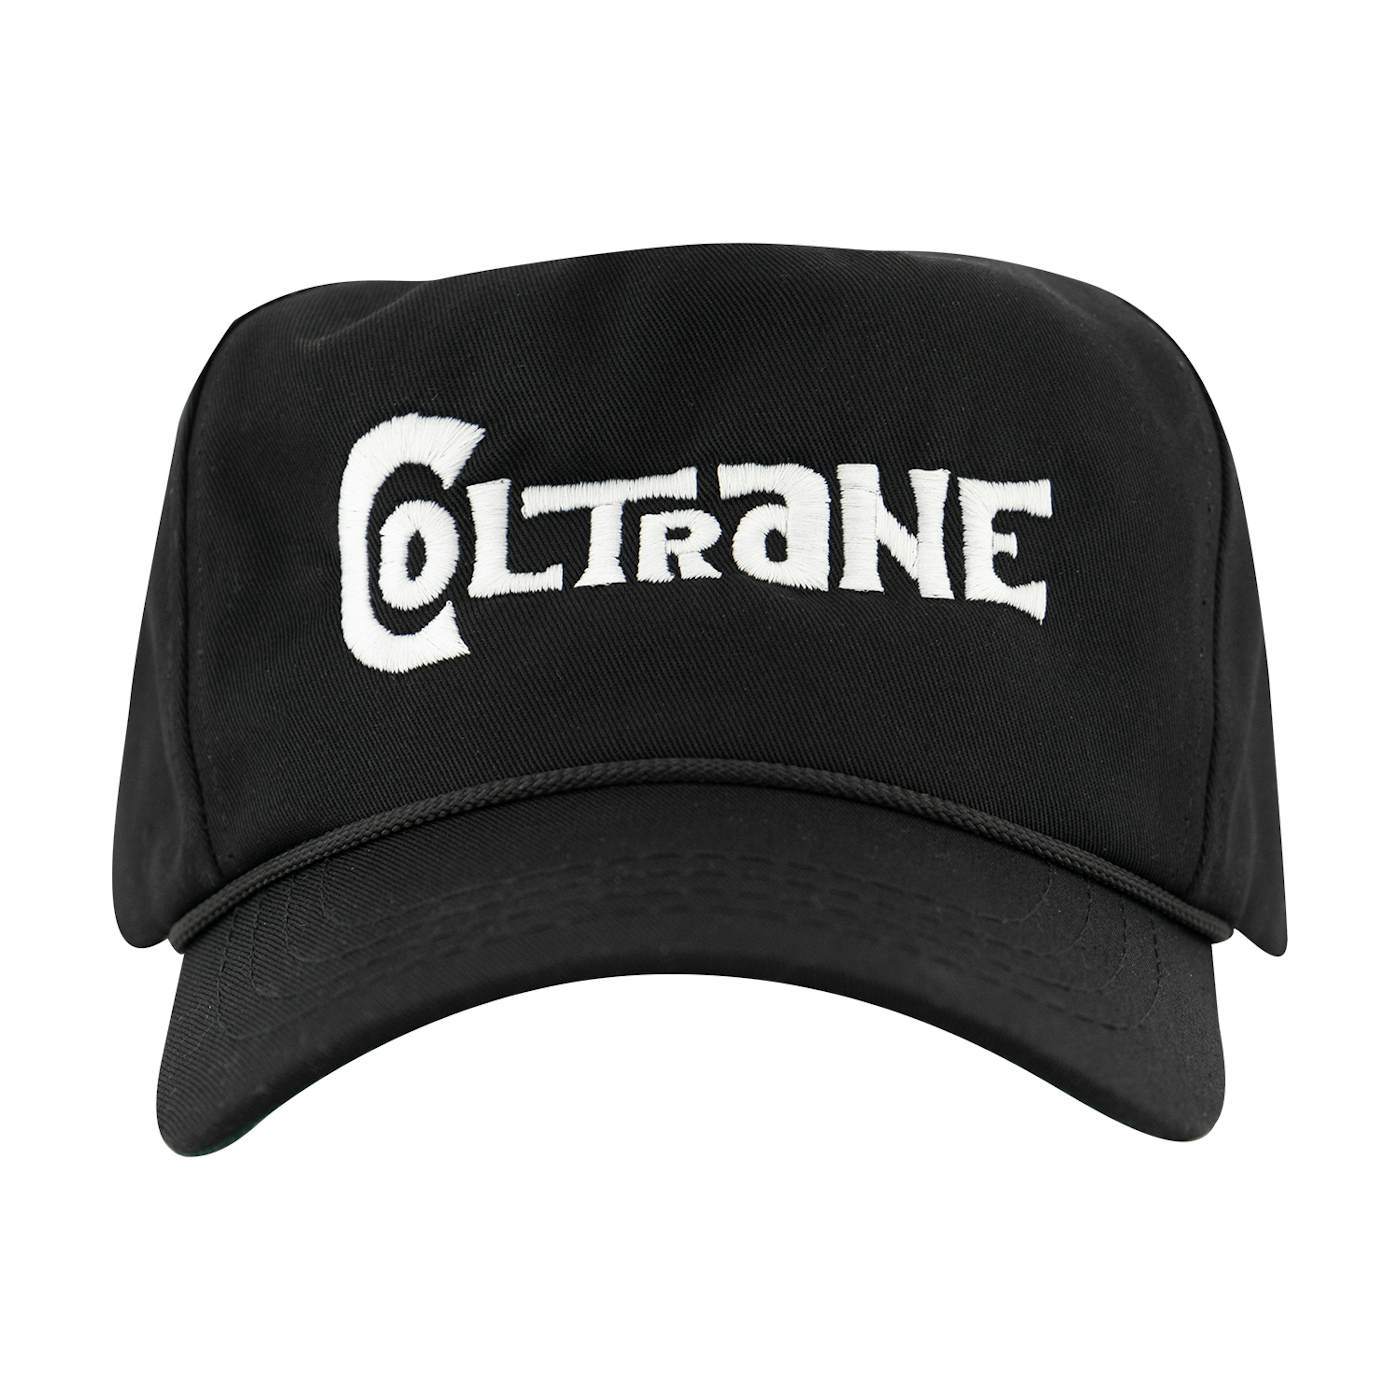 John Coltrane Coltrane Embroidered Black Hat